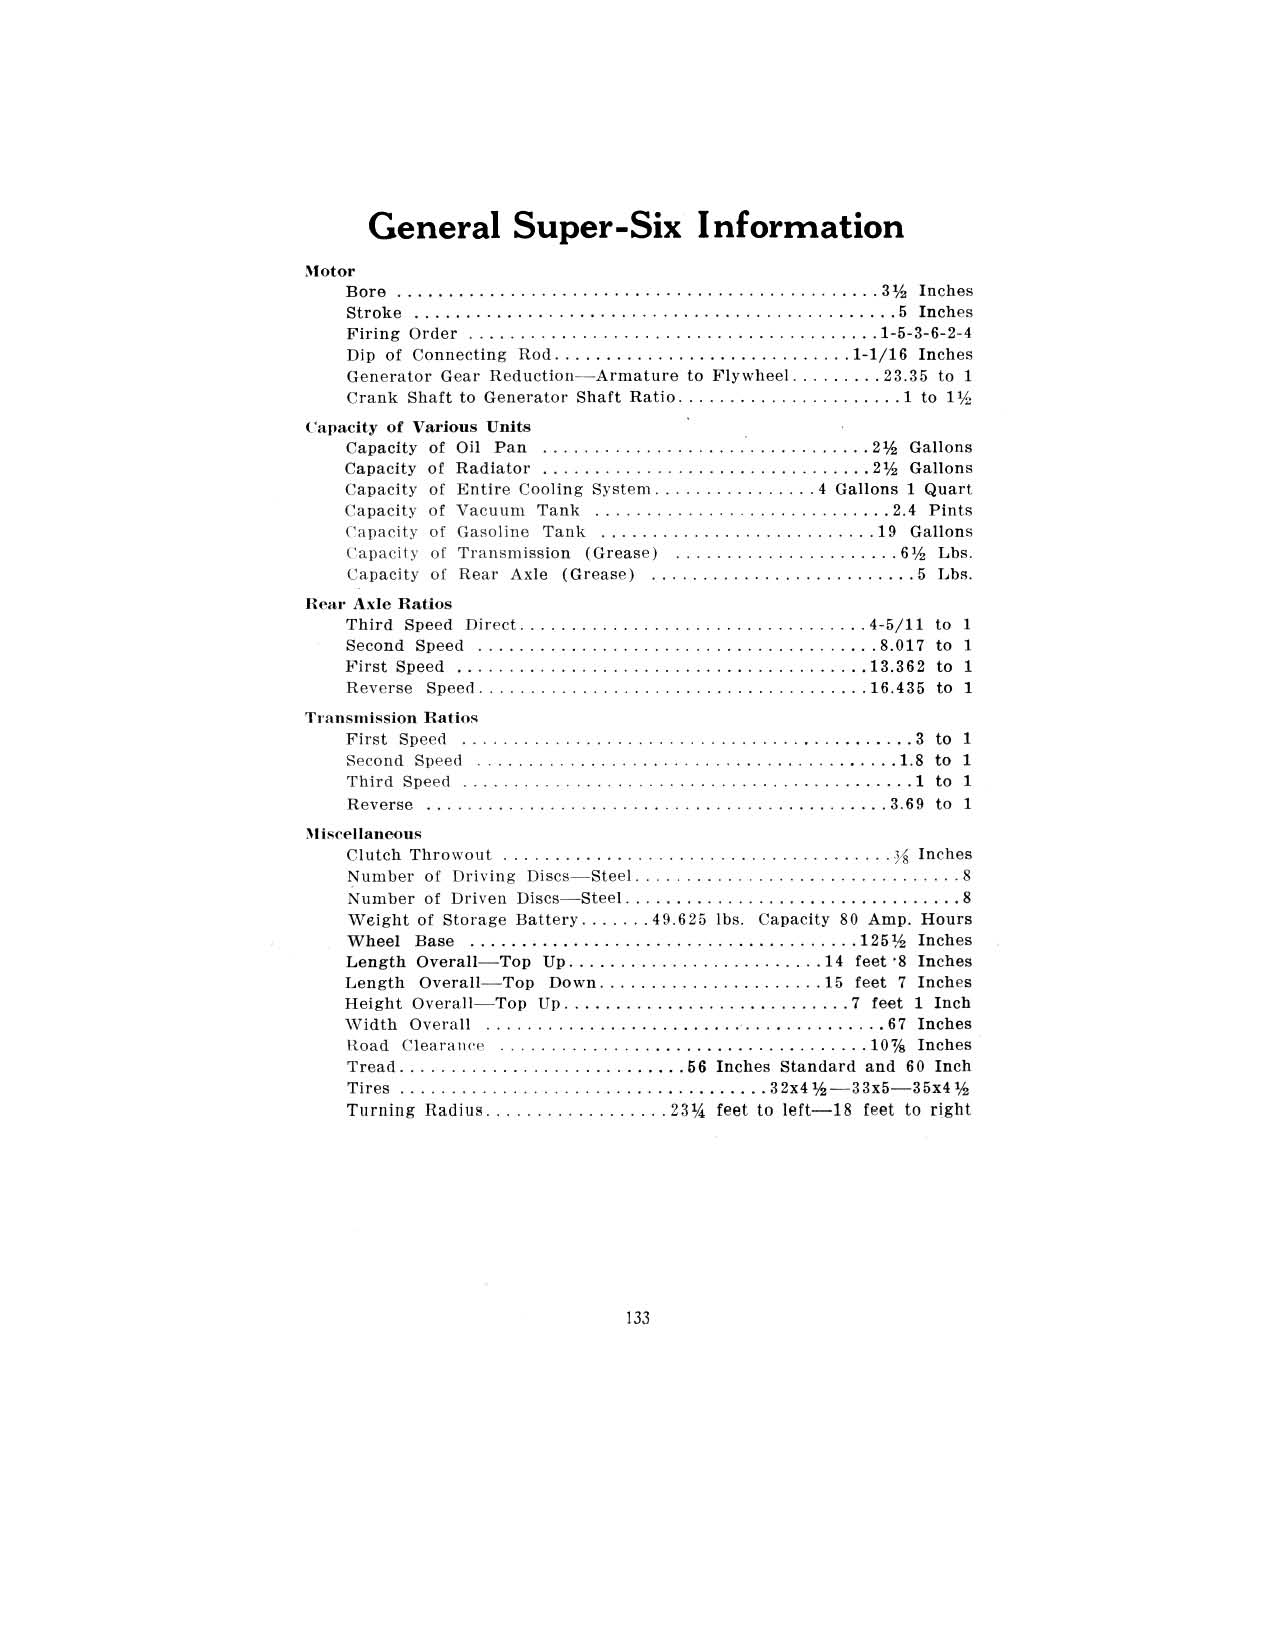 1916-18 Hudson Super-Six Service Manual-135